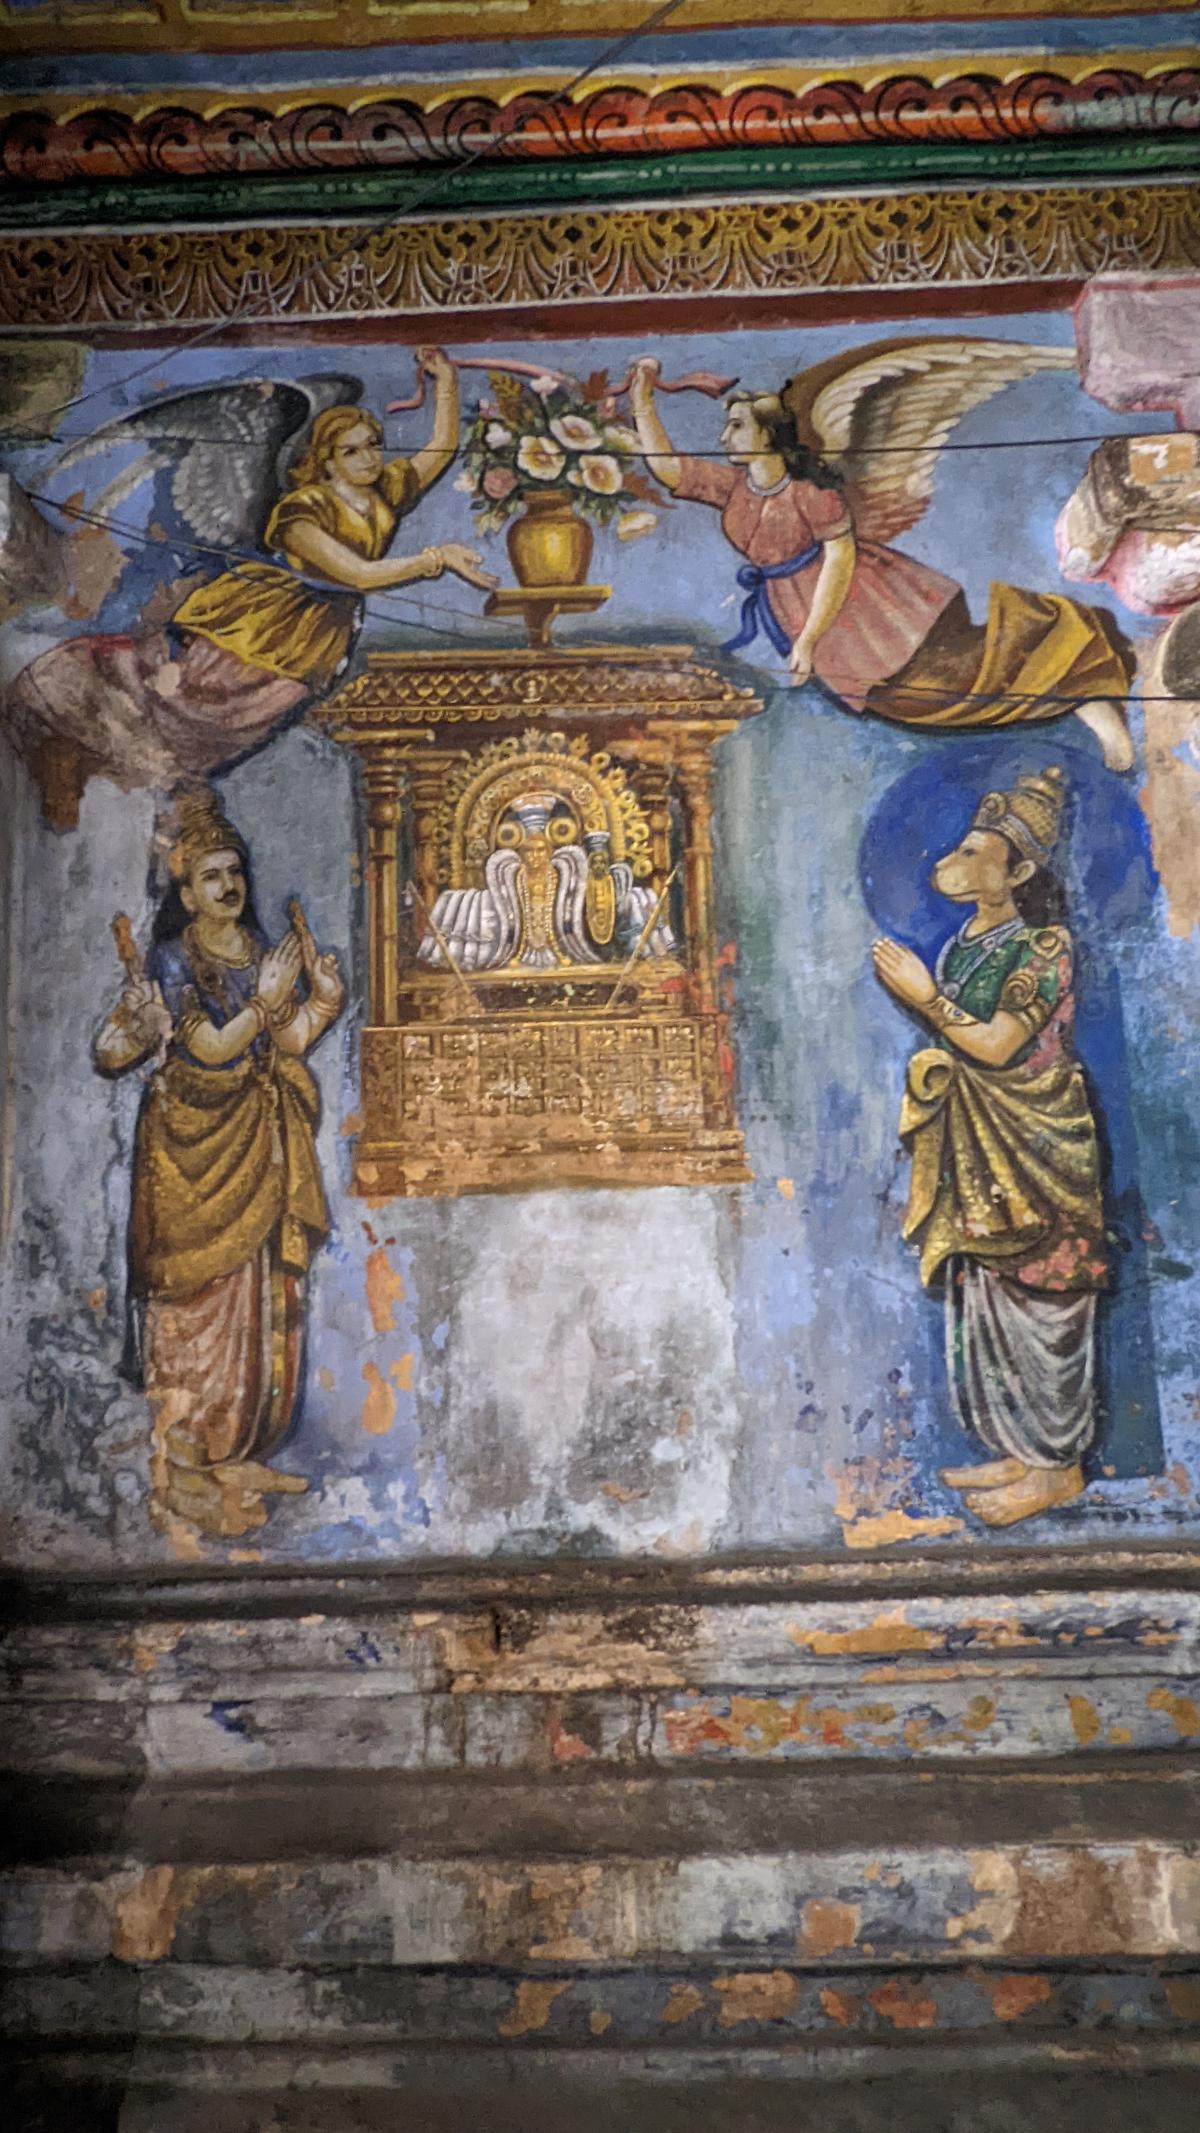 Cherubs painted alongside Hindu deities